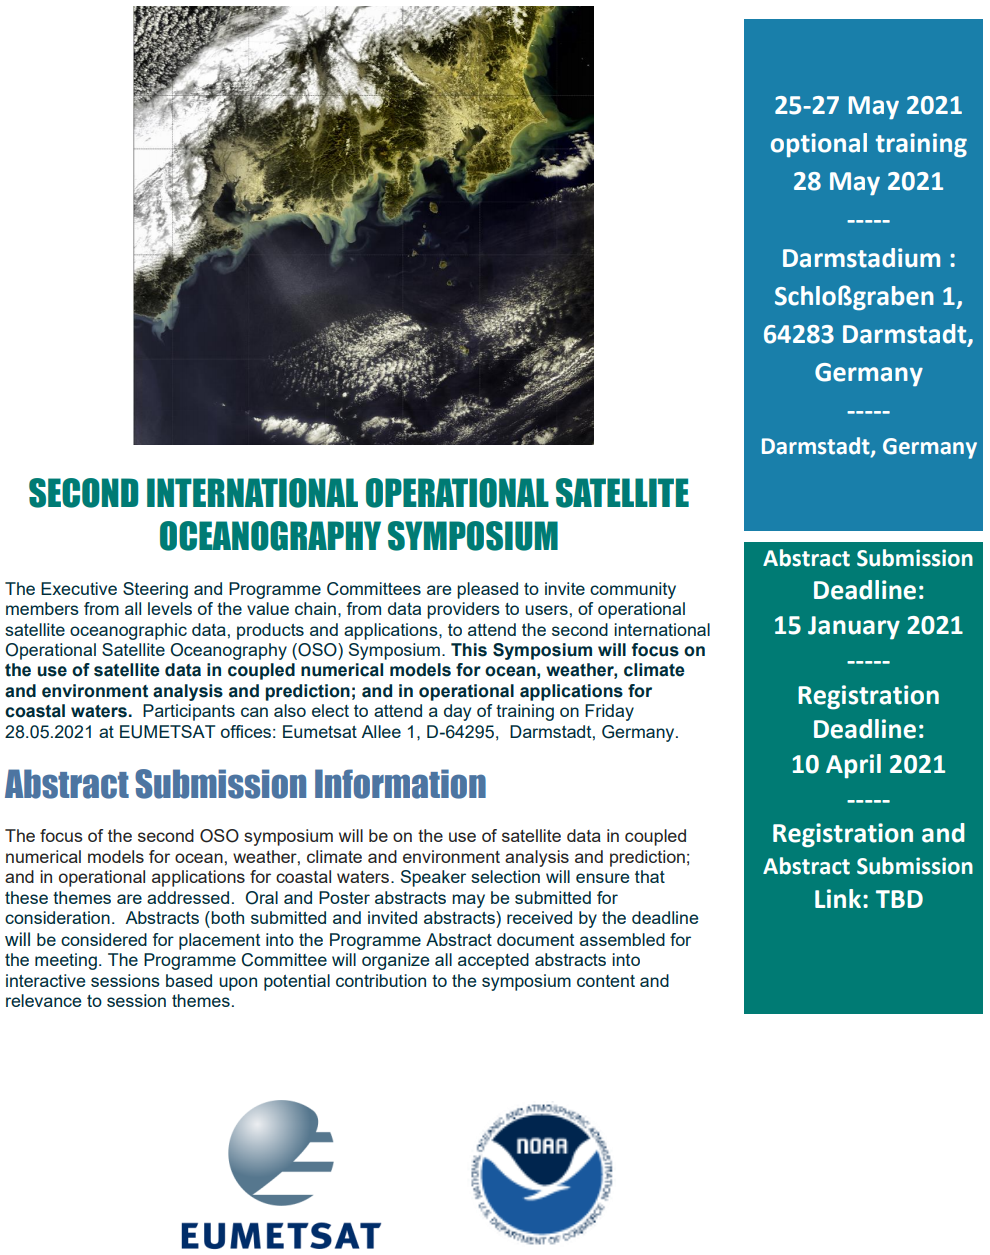 Meeting: 2nd International Operational Satellite Oceanography Symposium